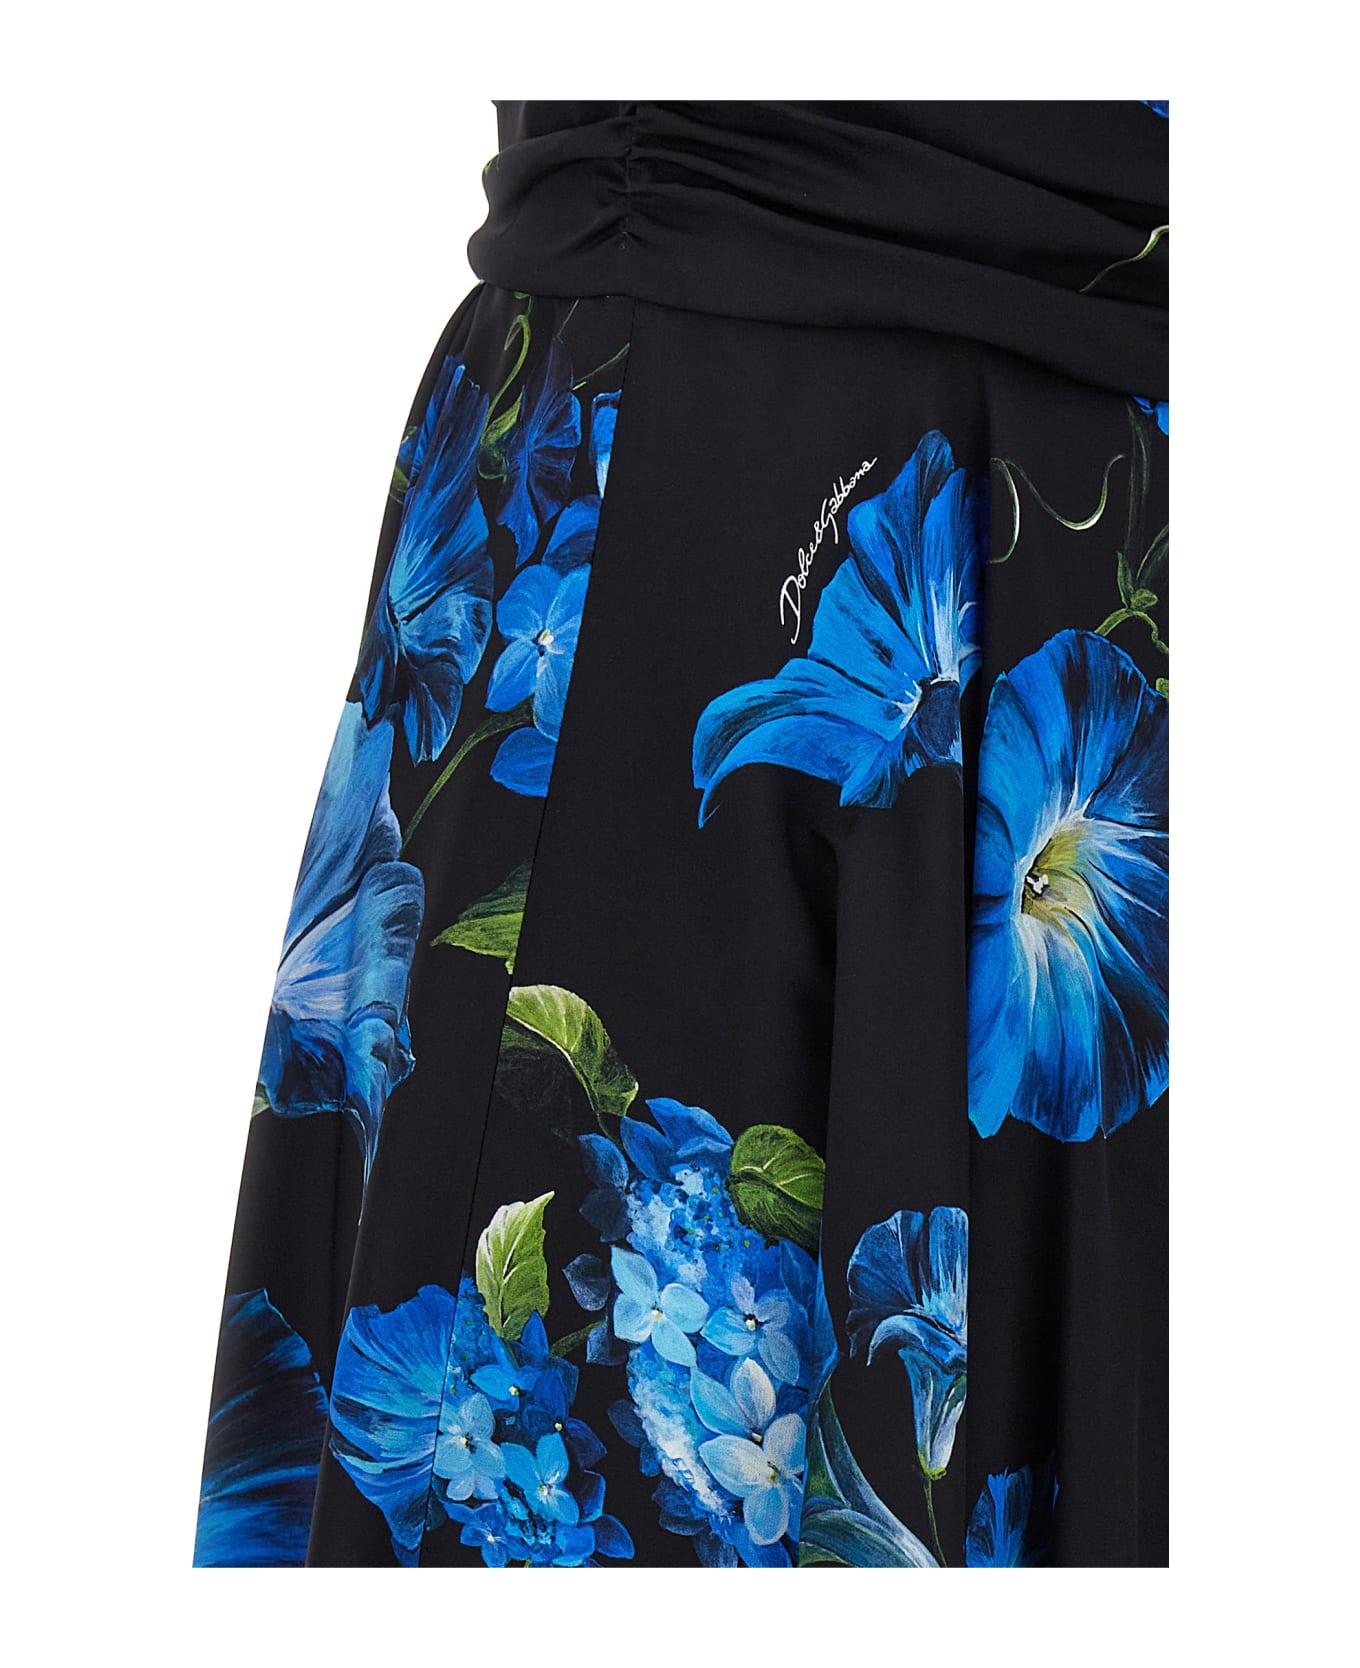 Dolce & Gabbana Floral Print Dress - Black ワンピース＆ドレス